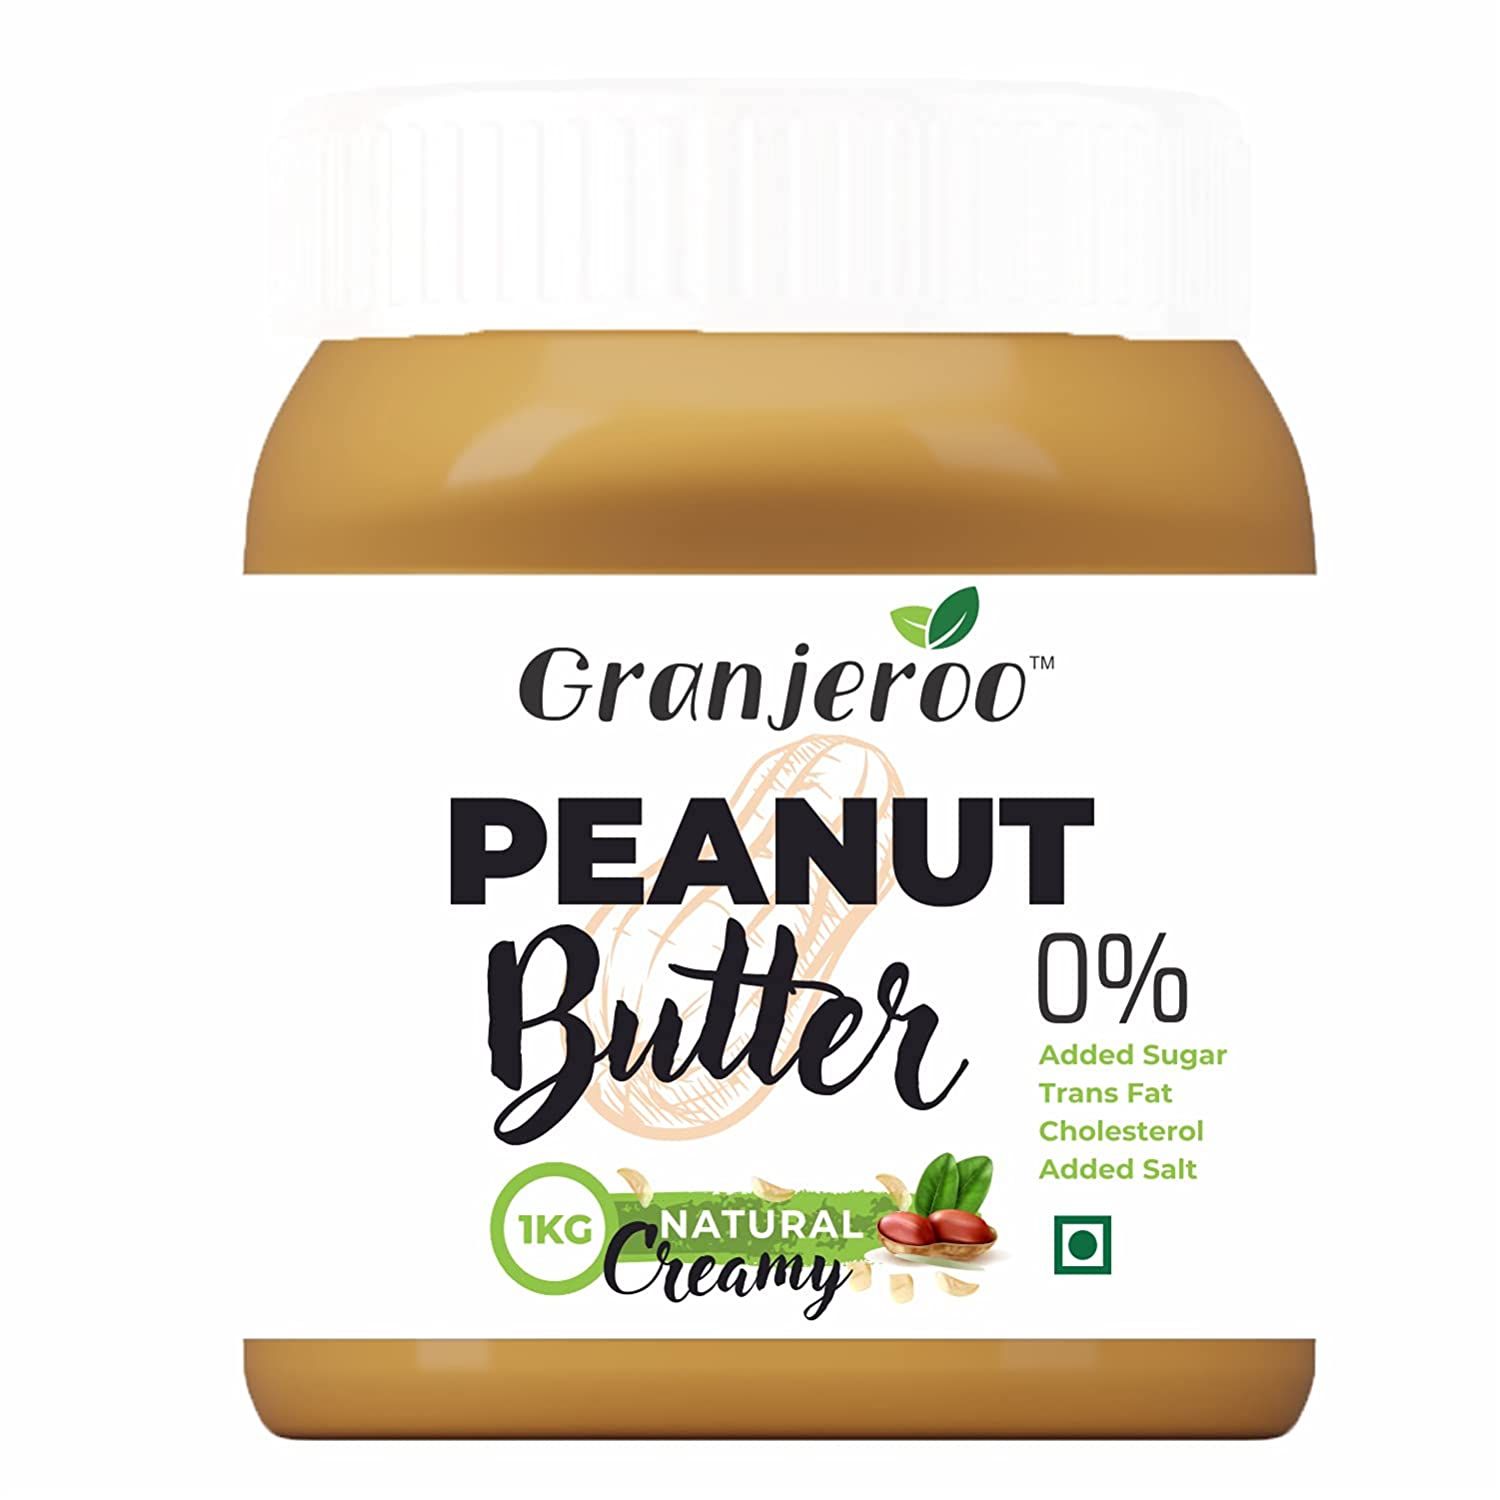 Granjeroo Natural Creamy Peanut Butter Image